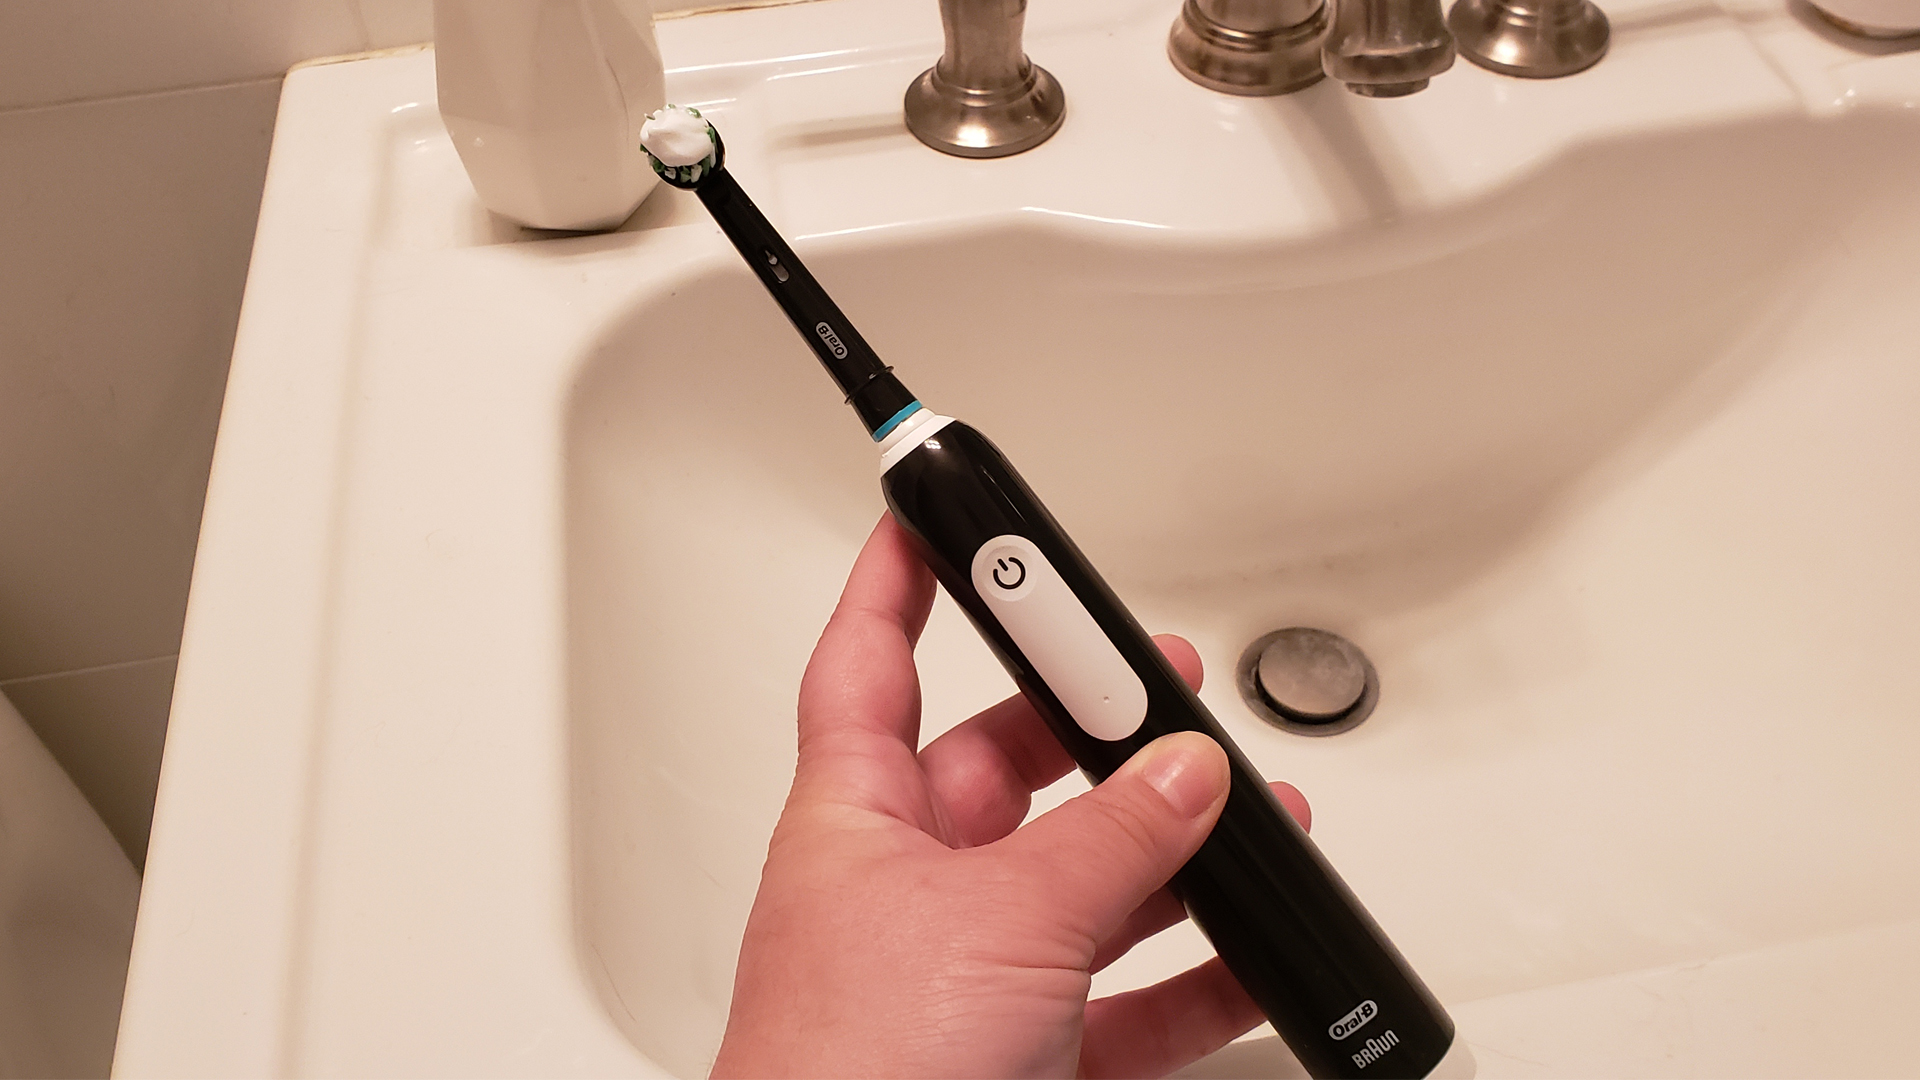 Oral B Pro 1000 electric toothbrush